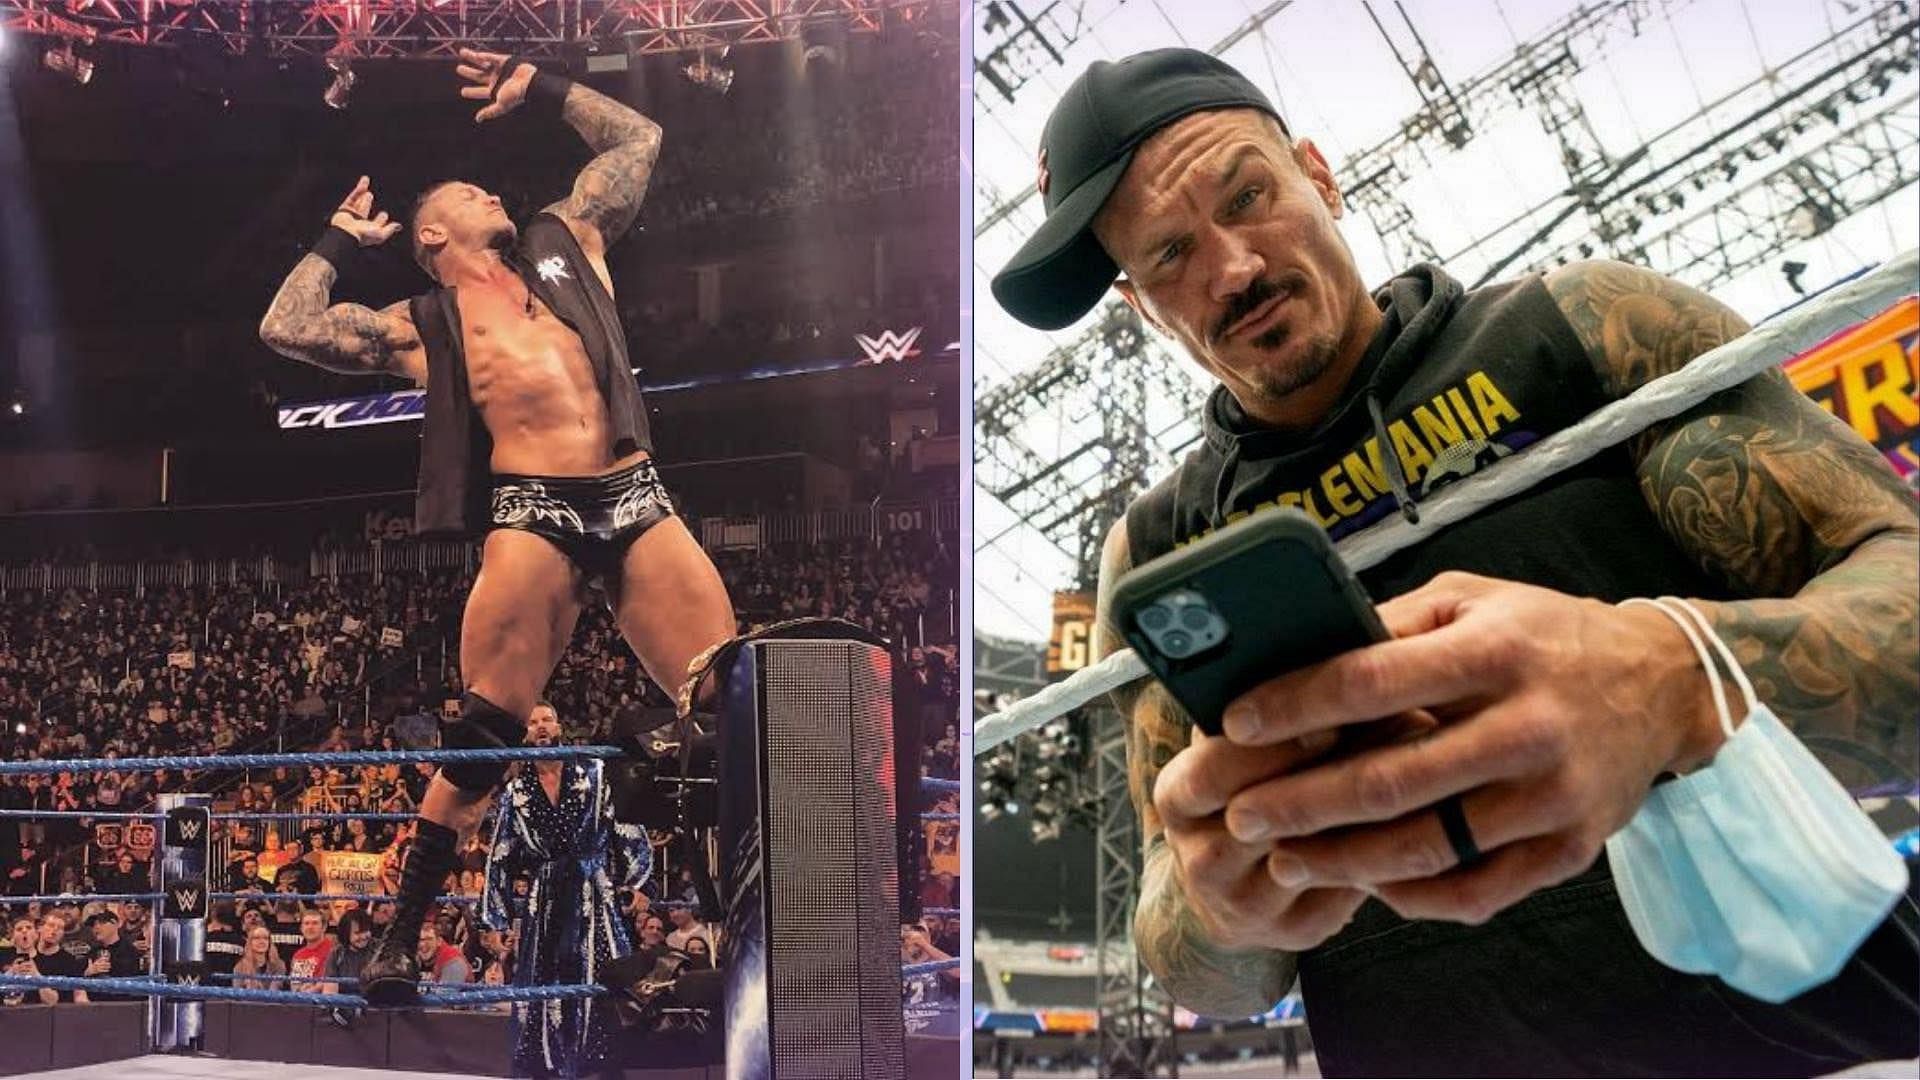 Randy Orton is a former WWE Champion